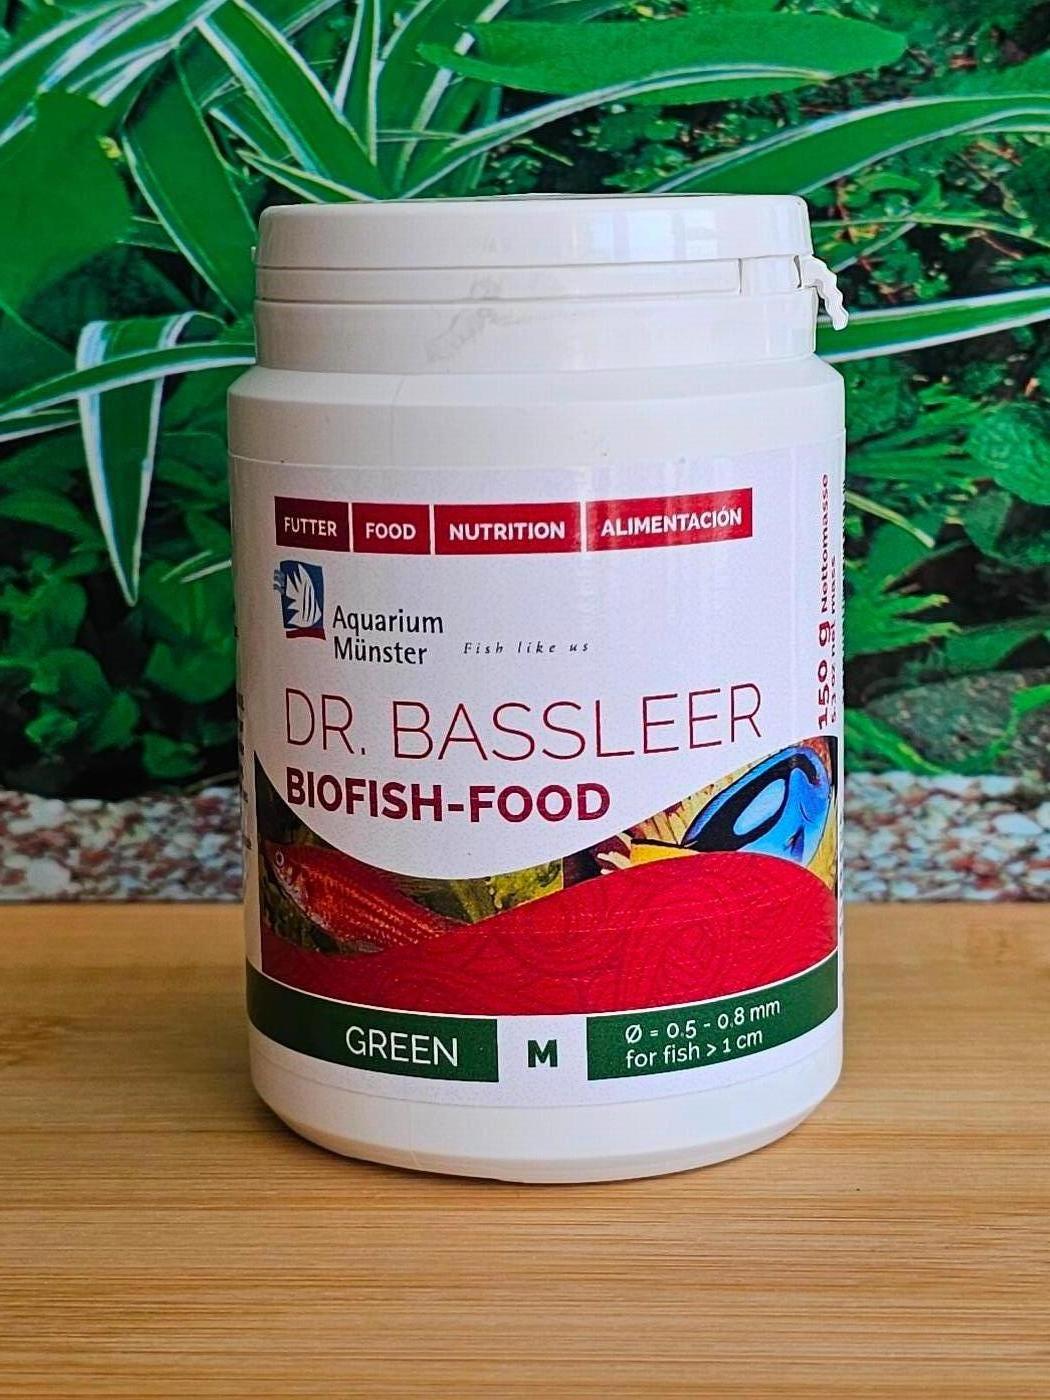 Dr. Bassleer Biofish-Food GREEN  60g-68g